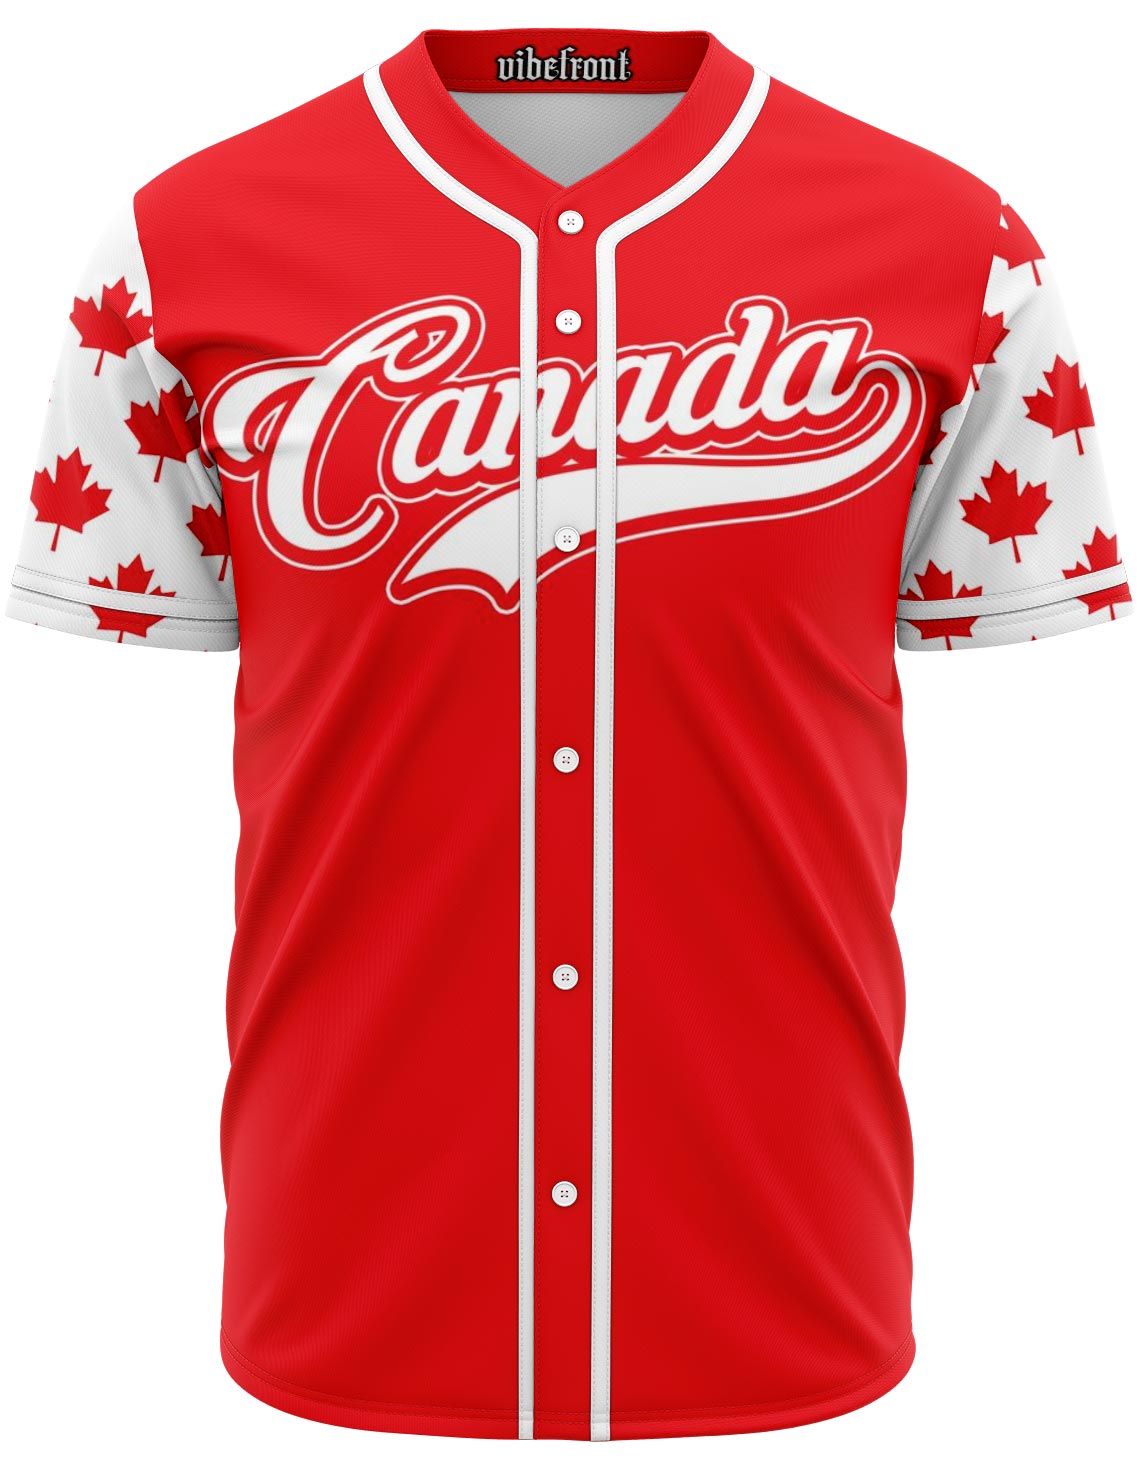 canada baseball jersey